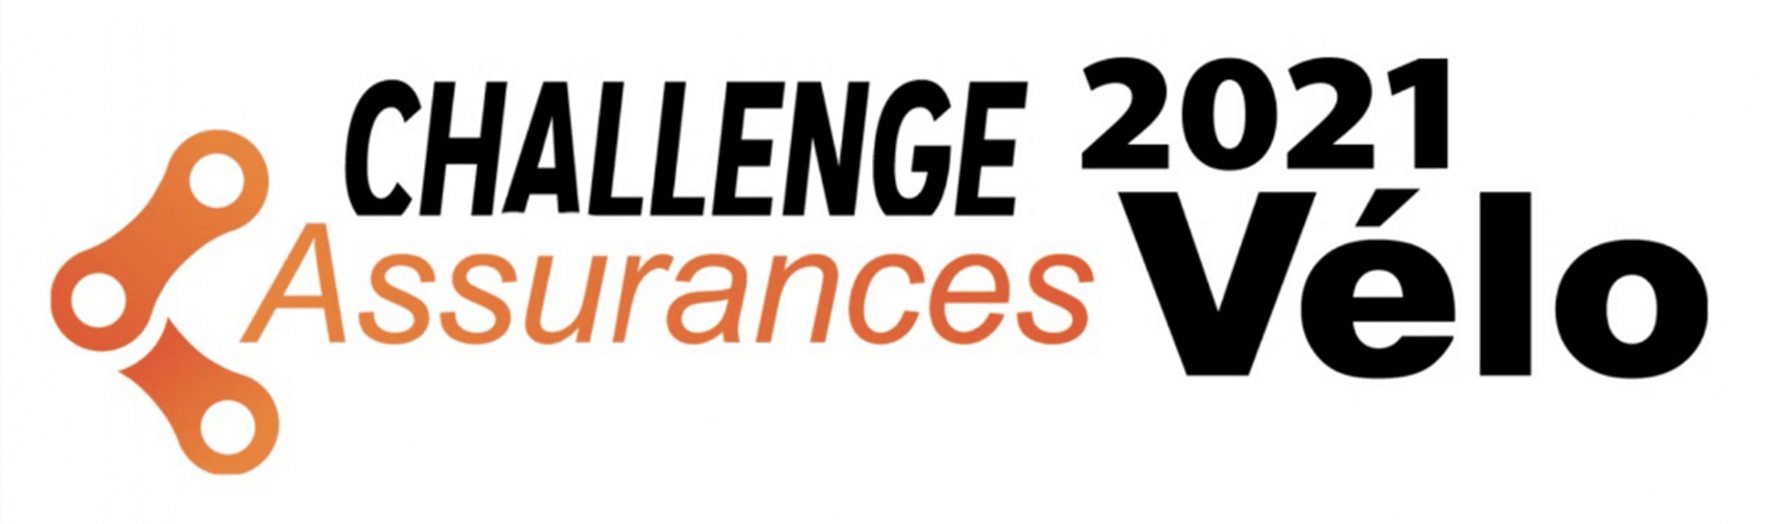 Logo Challenge 2021